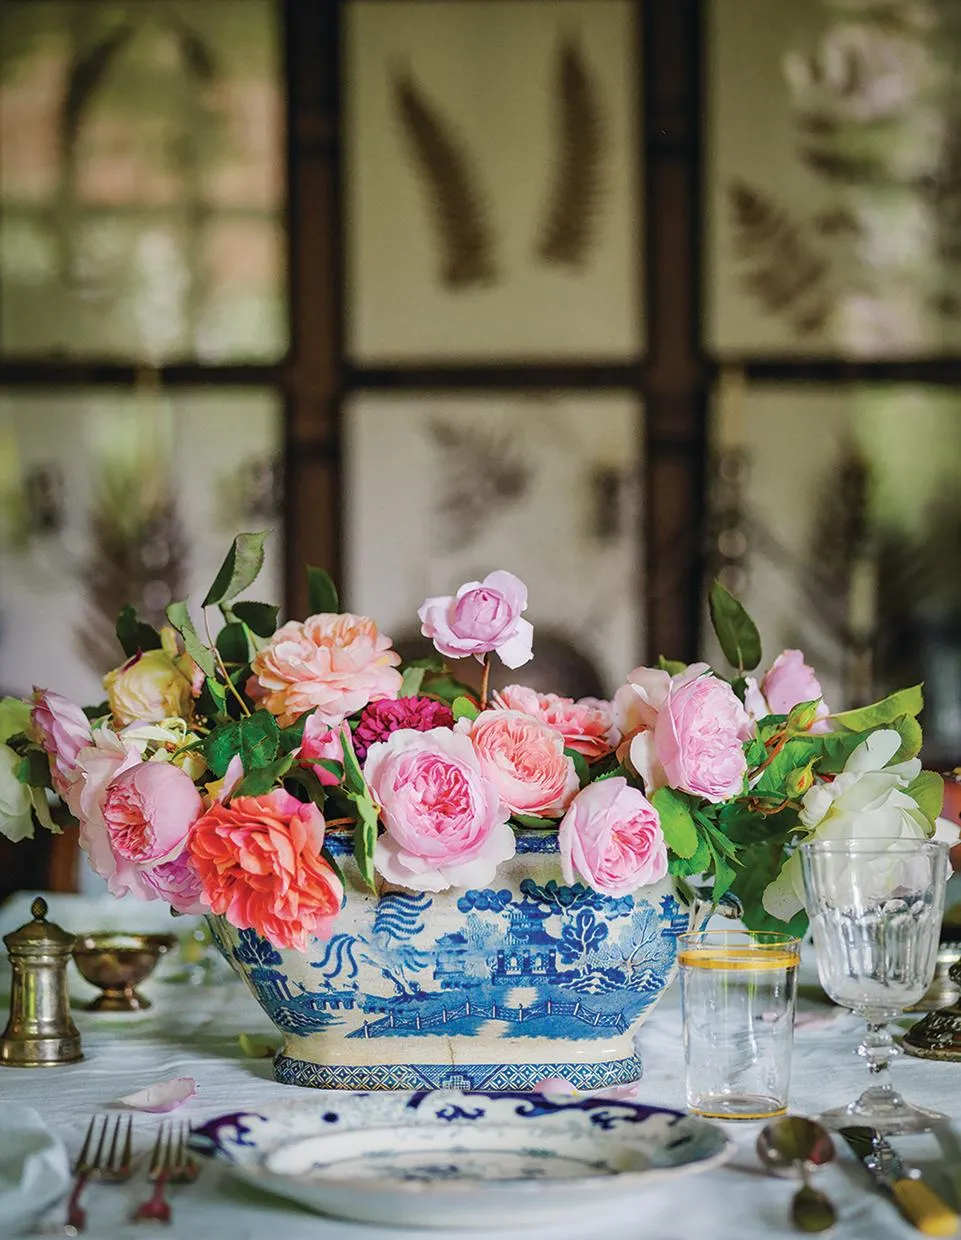 Wardington Manor: display of flowers on the dining table.